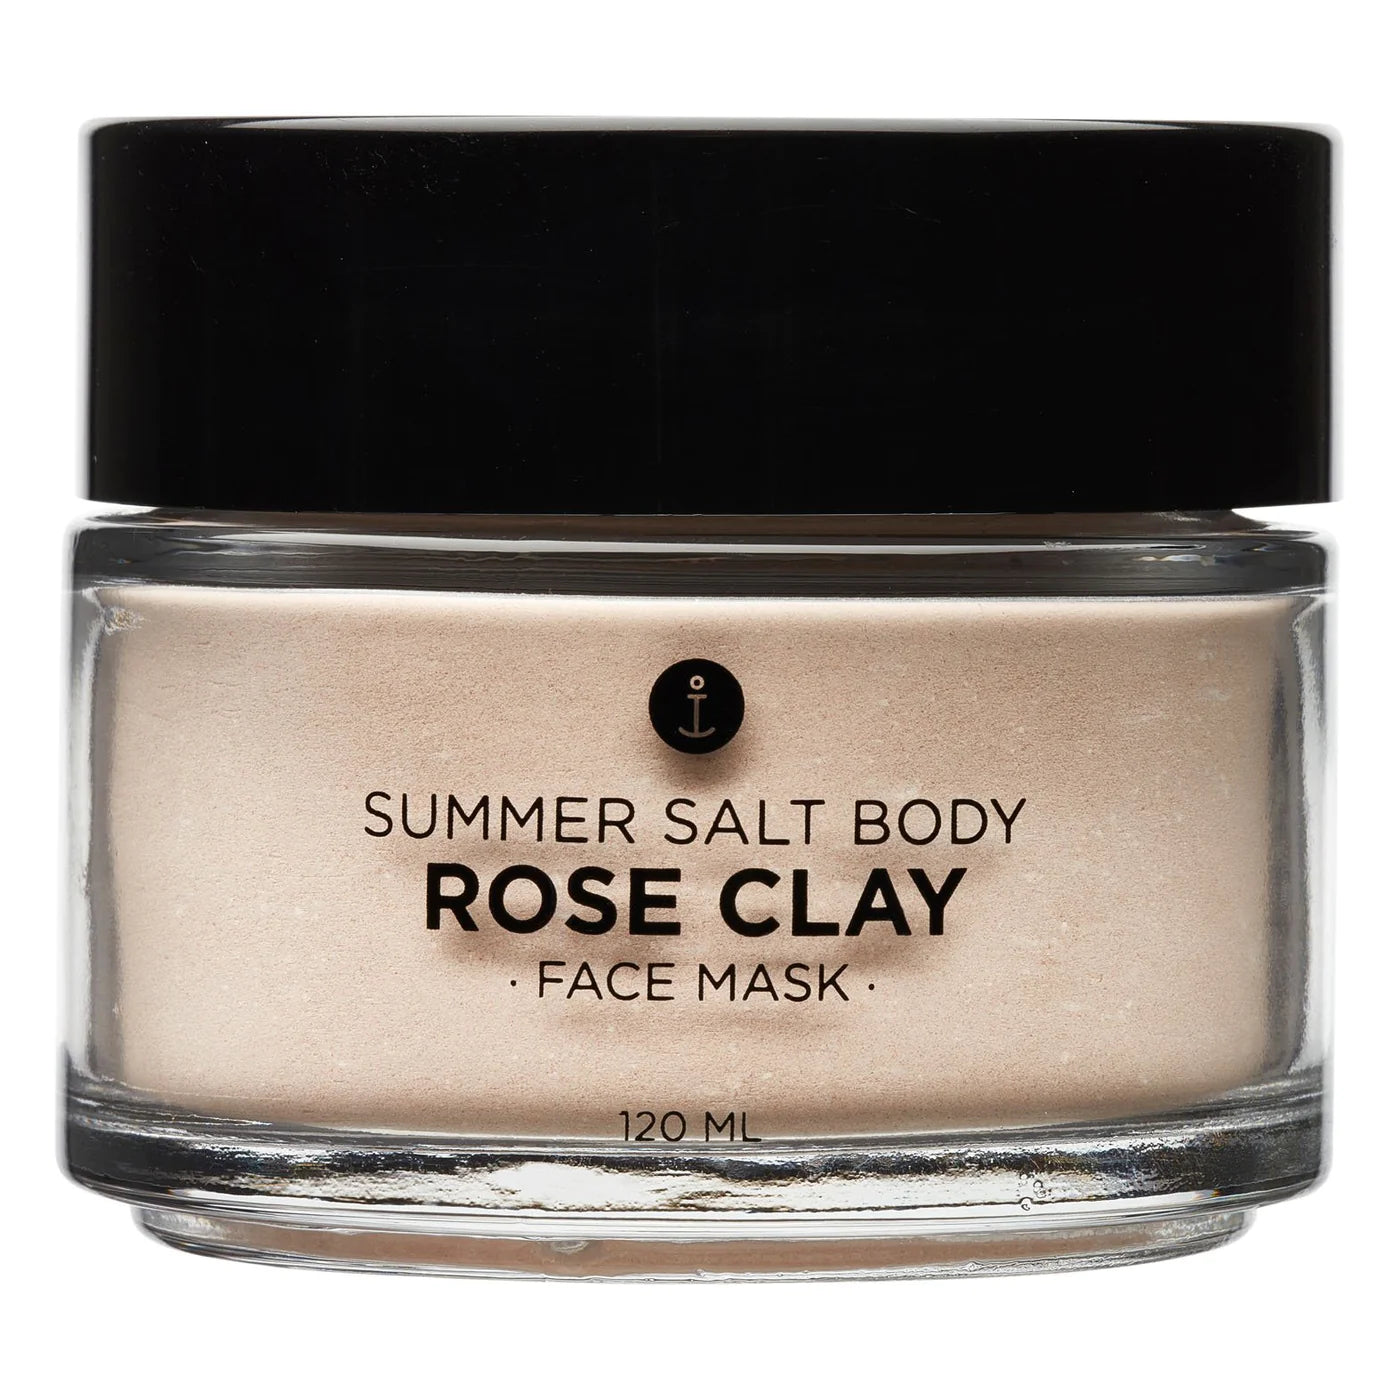 Summer Salt Body - Rose Clay Mask 120ml